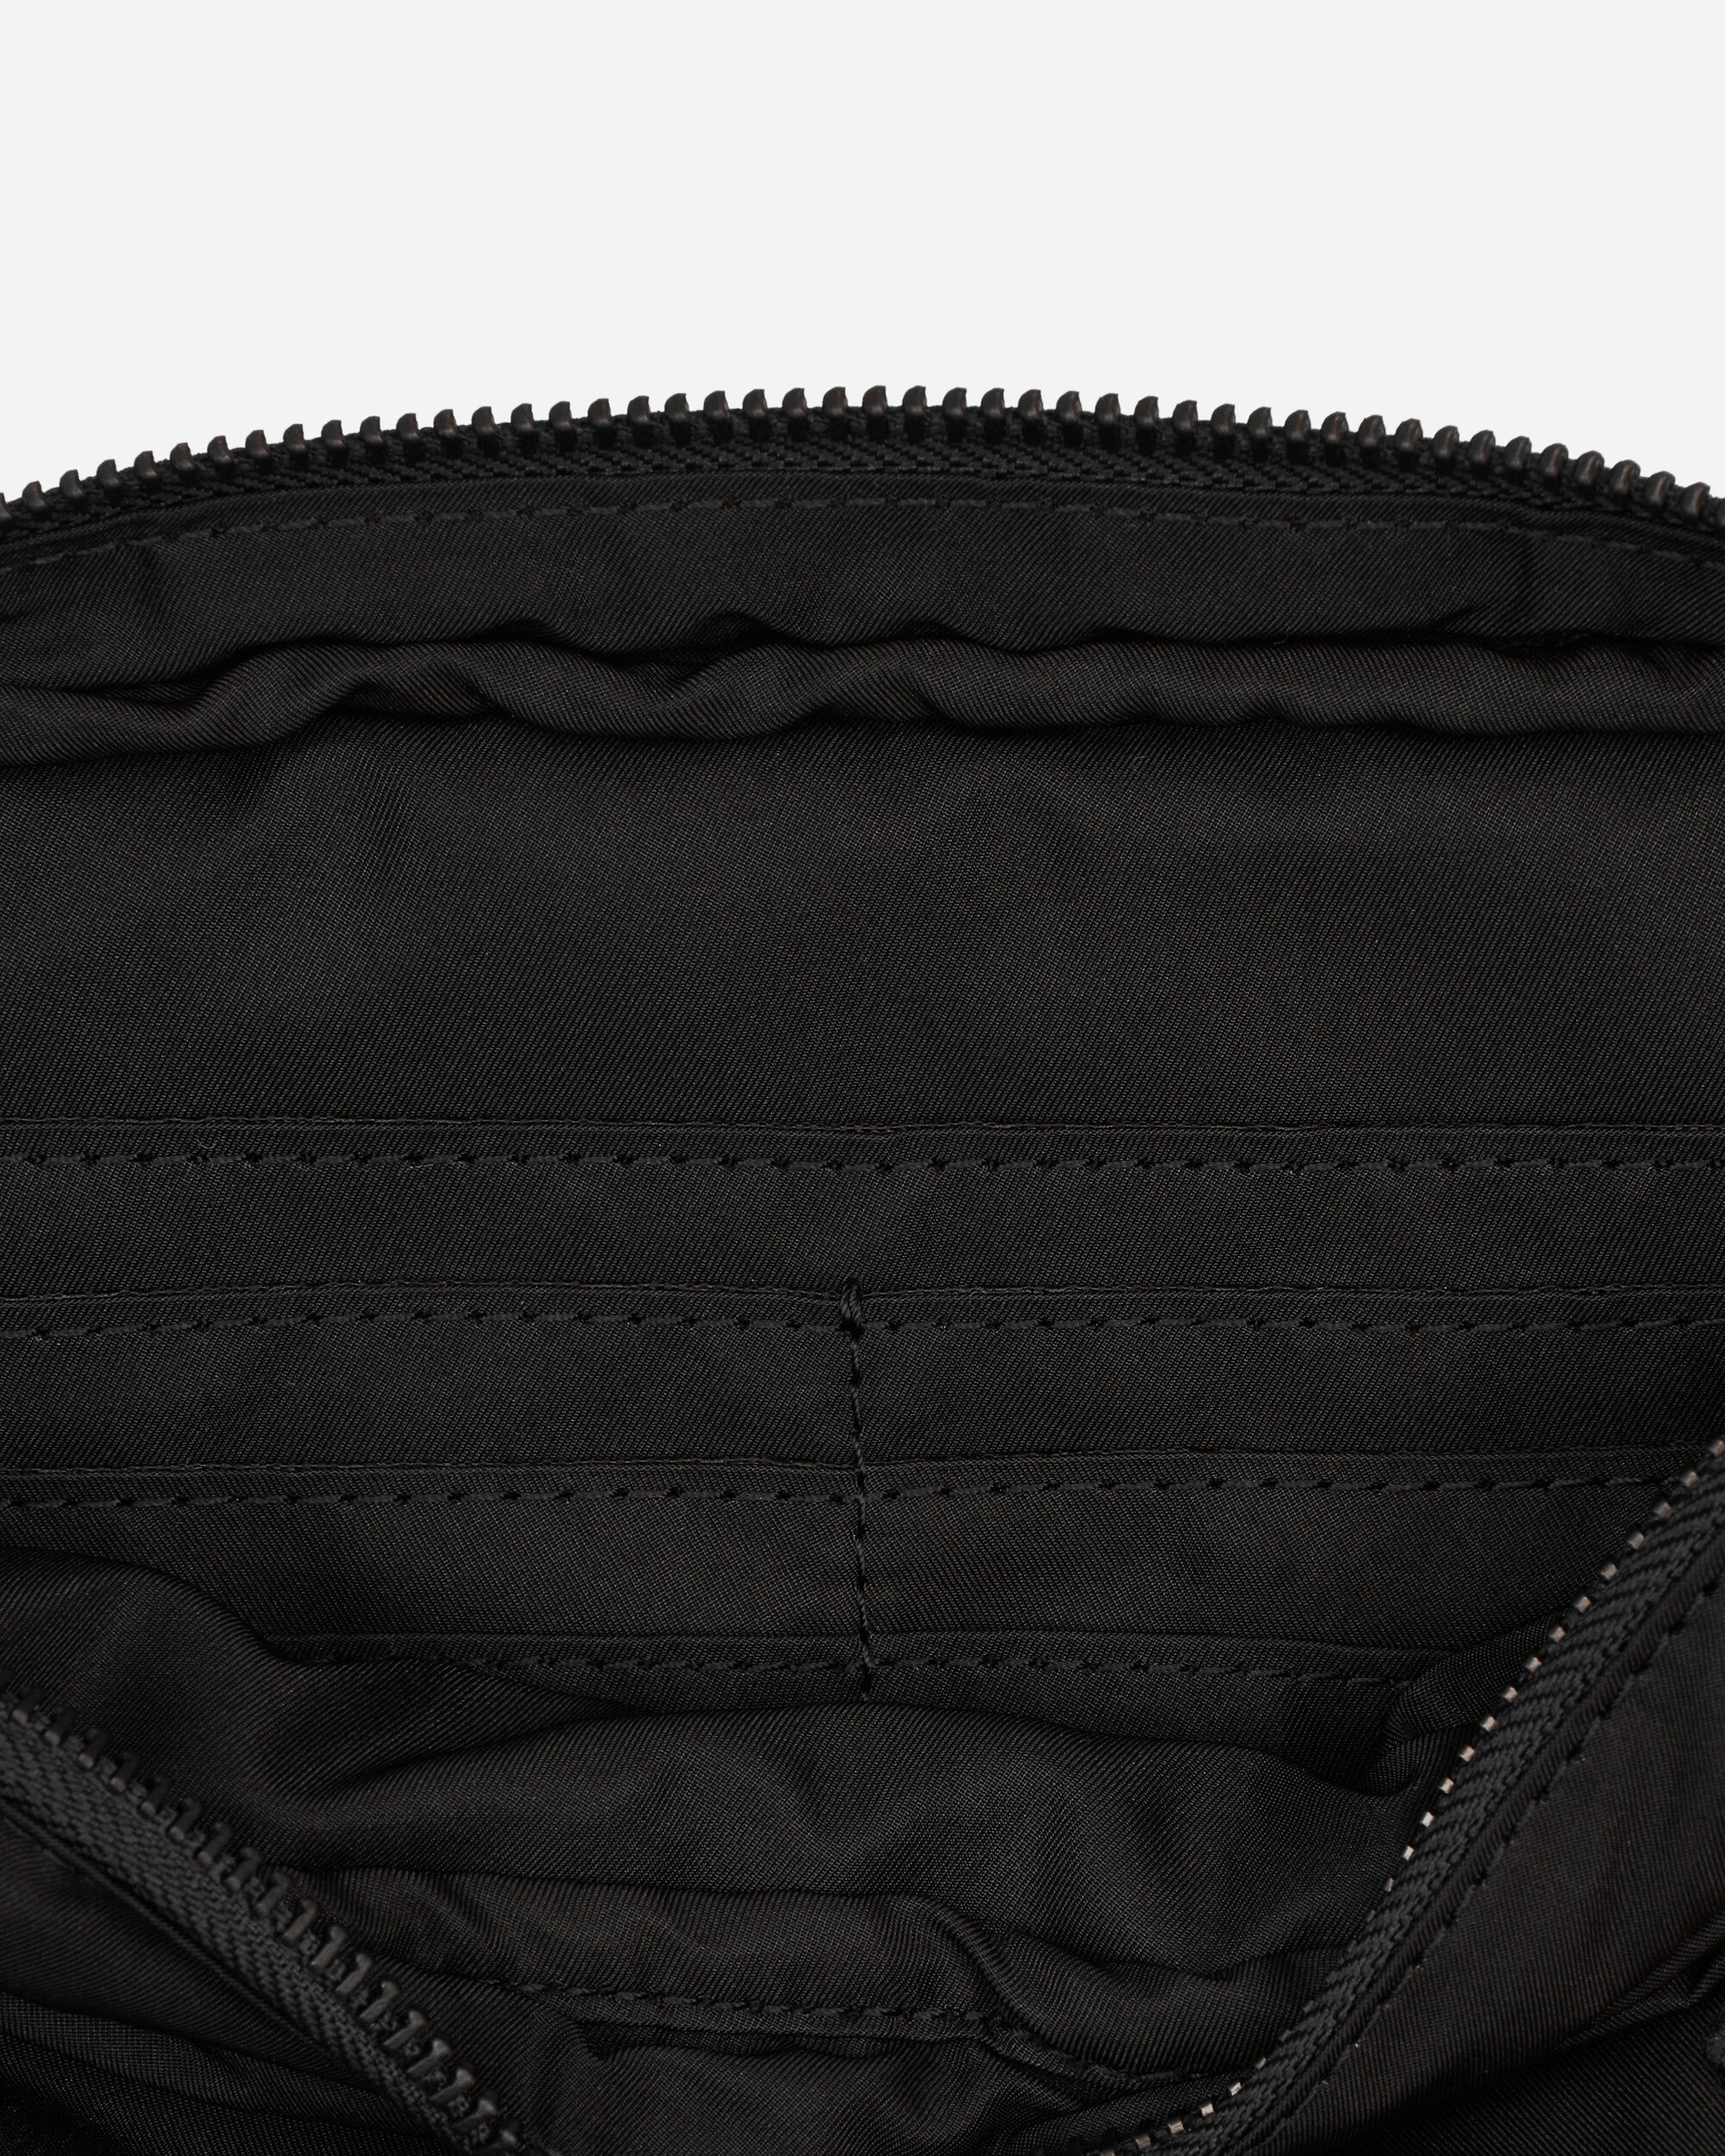 Kenzo Paris Crossbody Bag Black Bags and Backpacks Shoulder FD55SA468F26 99